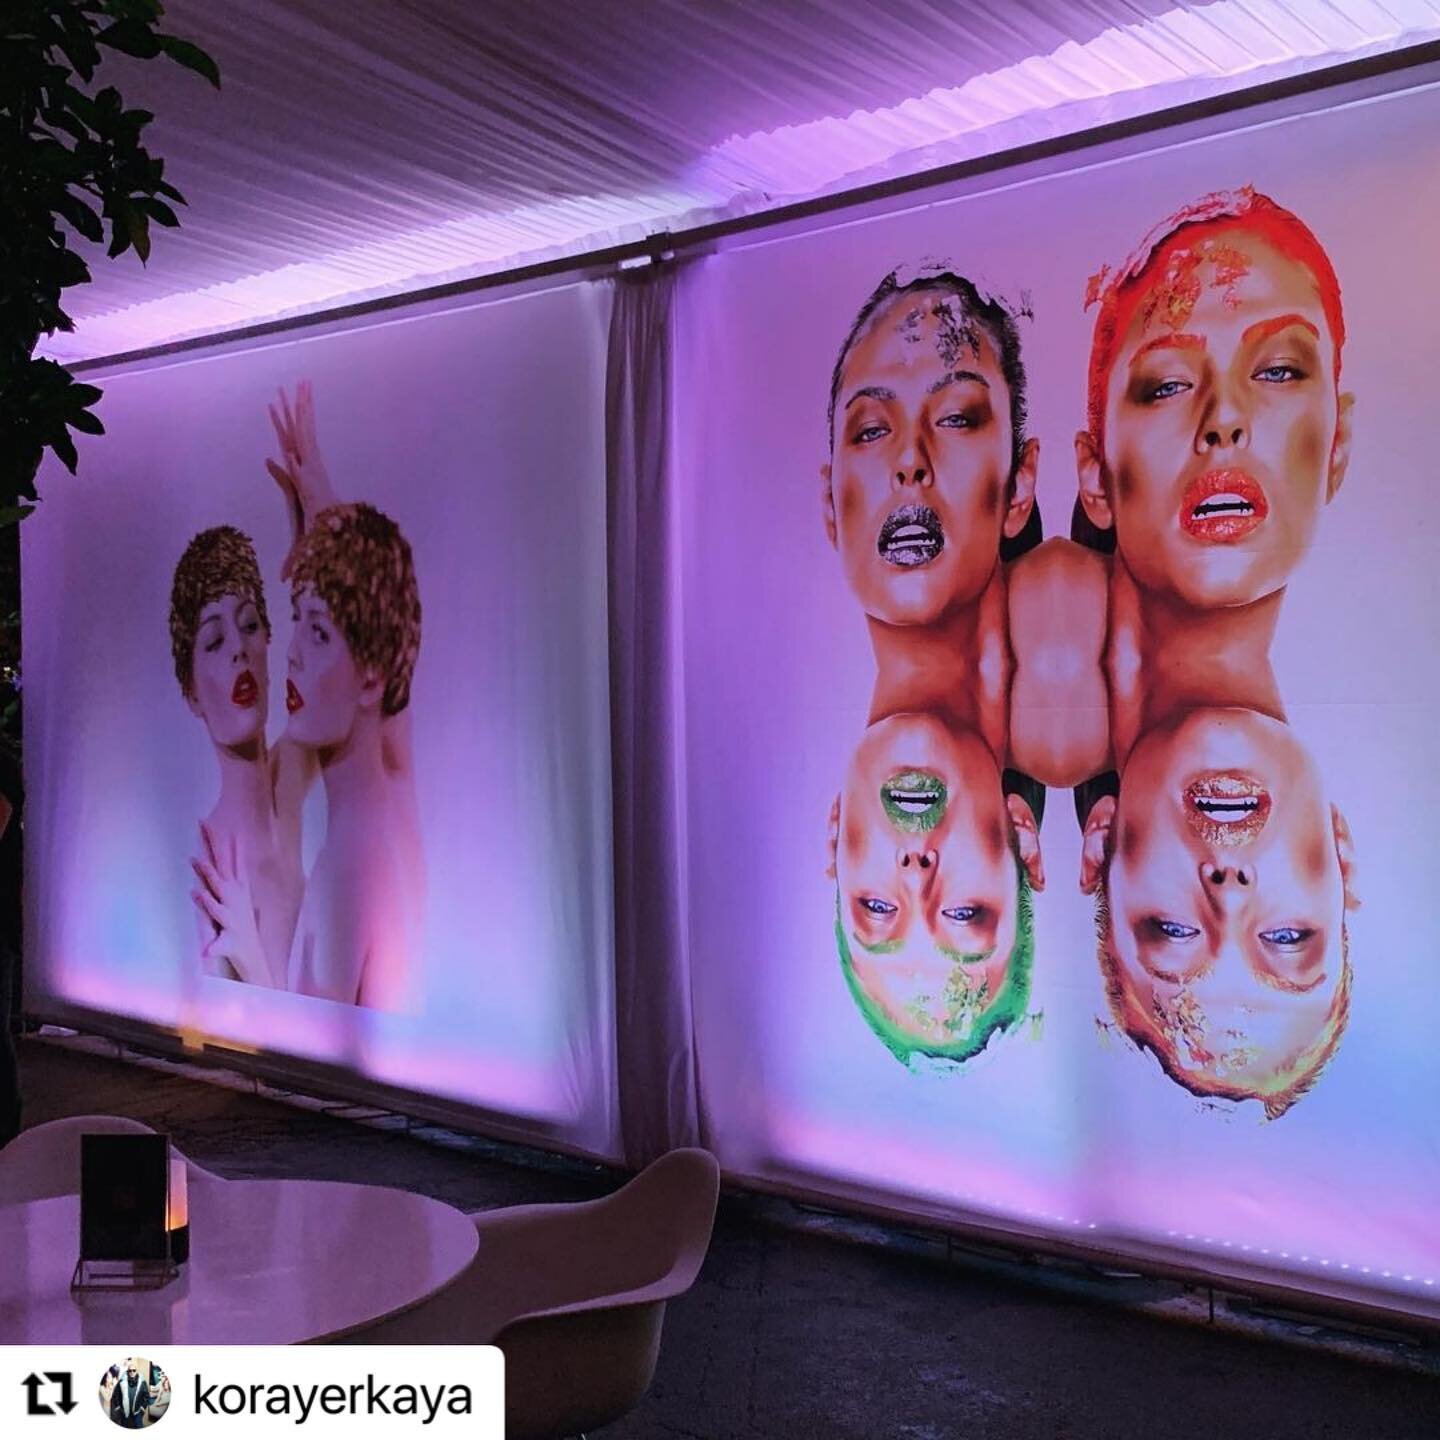 Always a pleasure to collaborate with the talented @korayerkaya 

#repost #art #artists #colab #photography #artwork #installation #exhibition #toronto #torontolife #torontoart #torontonightlife